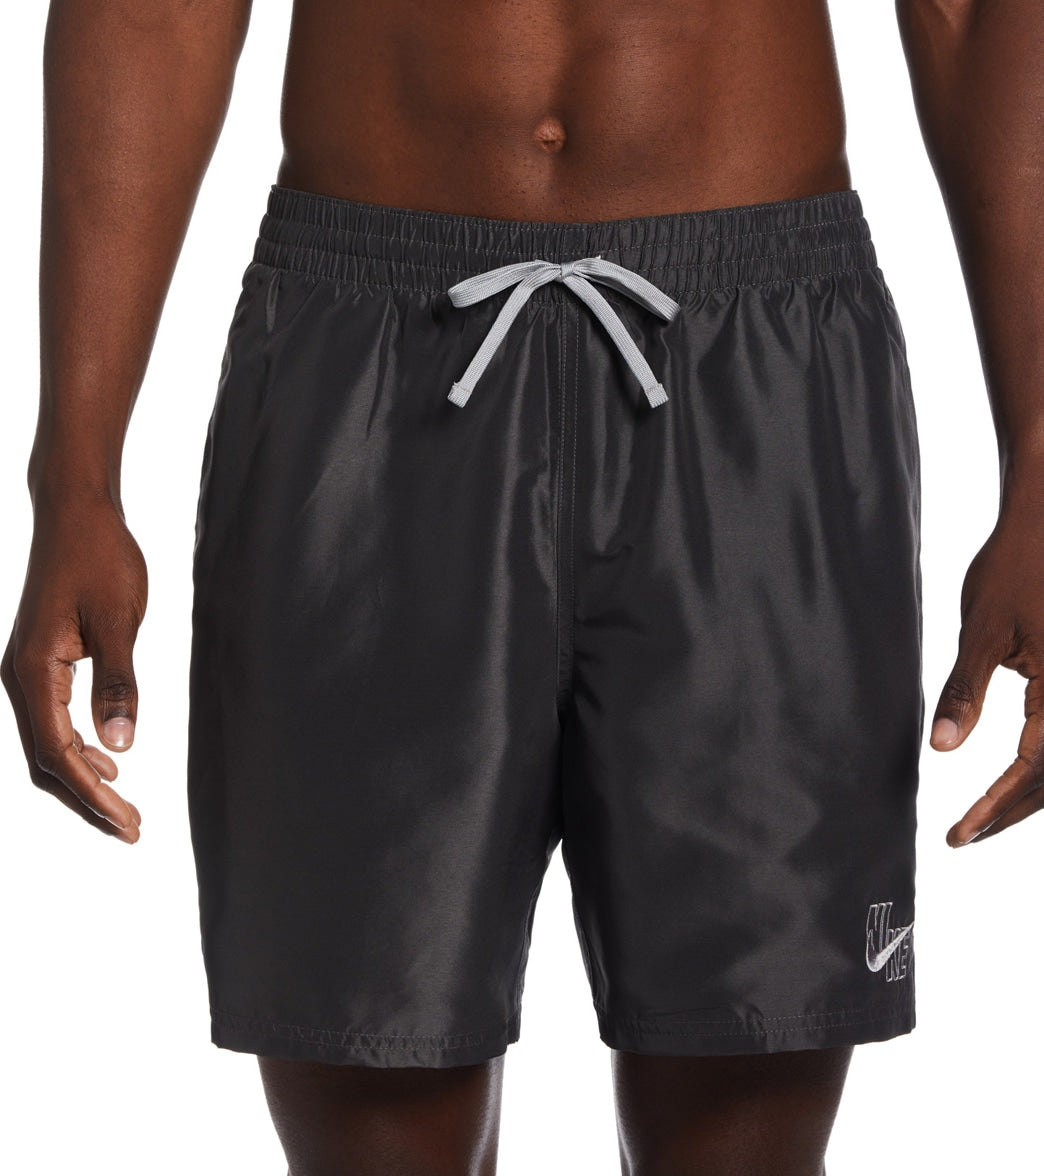 Nike Mens 18 Essential Logo Lap Swim Trunks